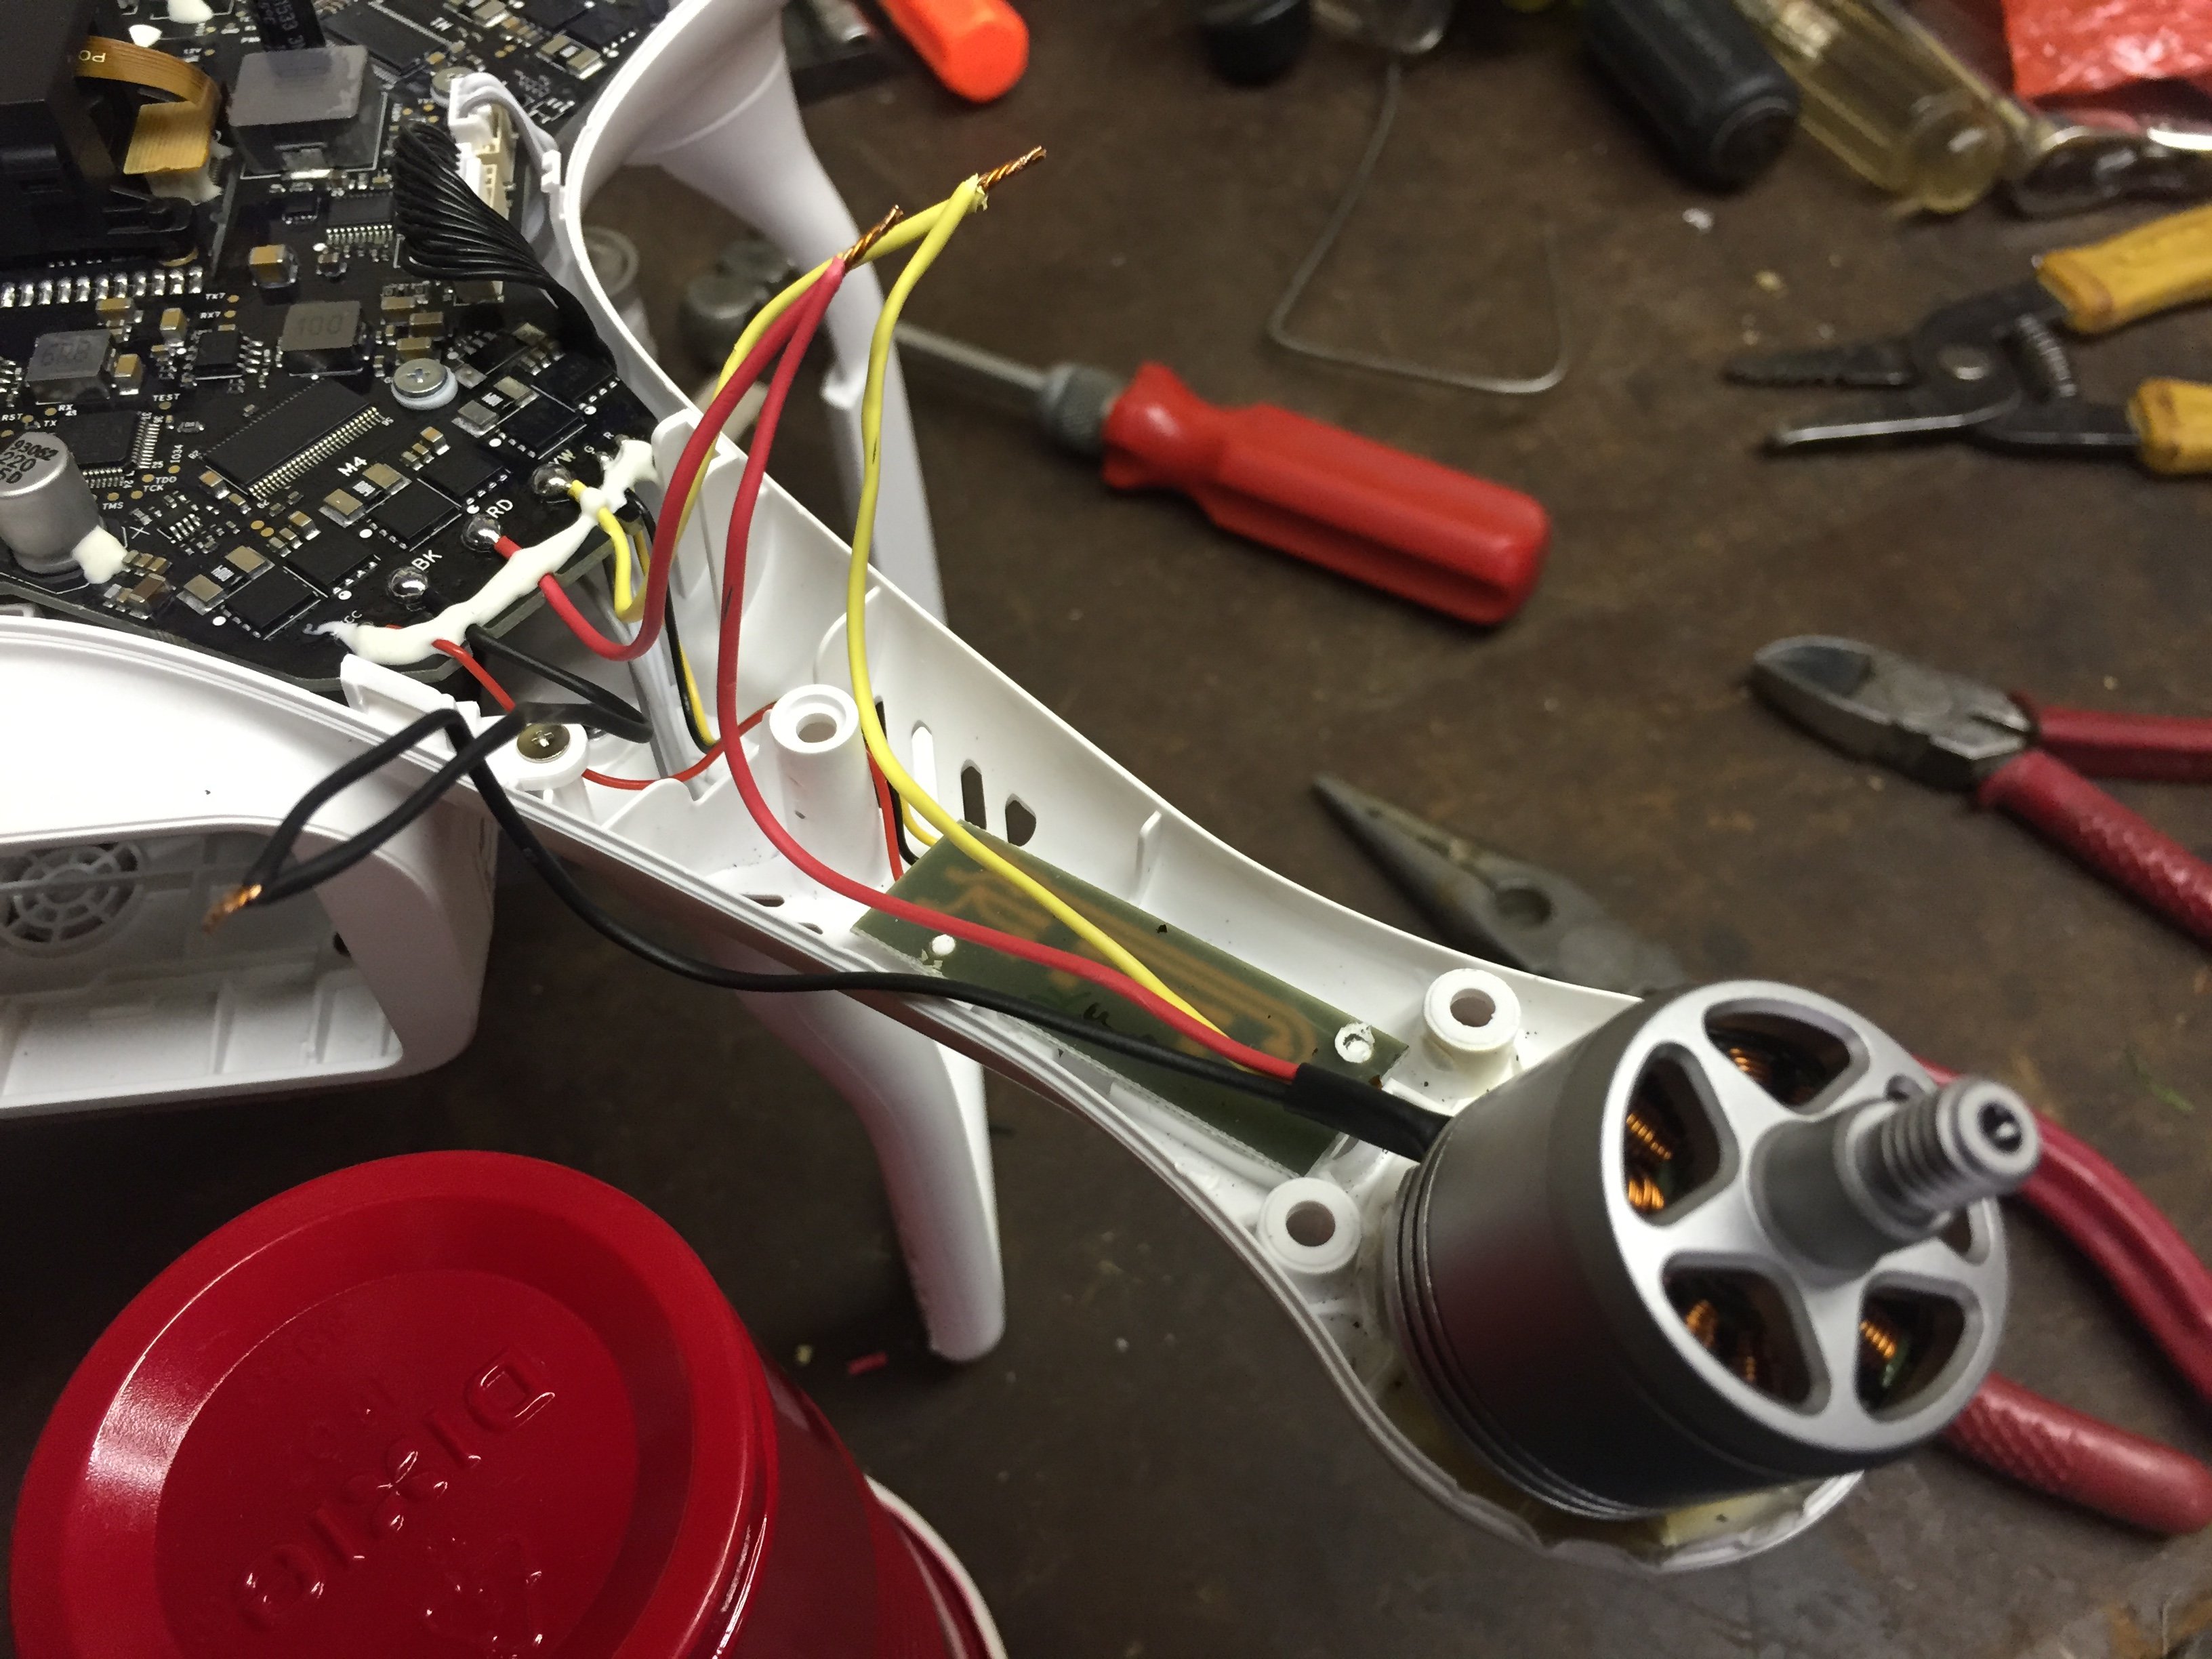 ESC Error attempted repair of motors. Looking for advice/ a good repair company | Phantom Drone Forum